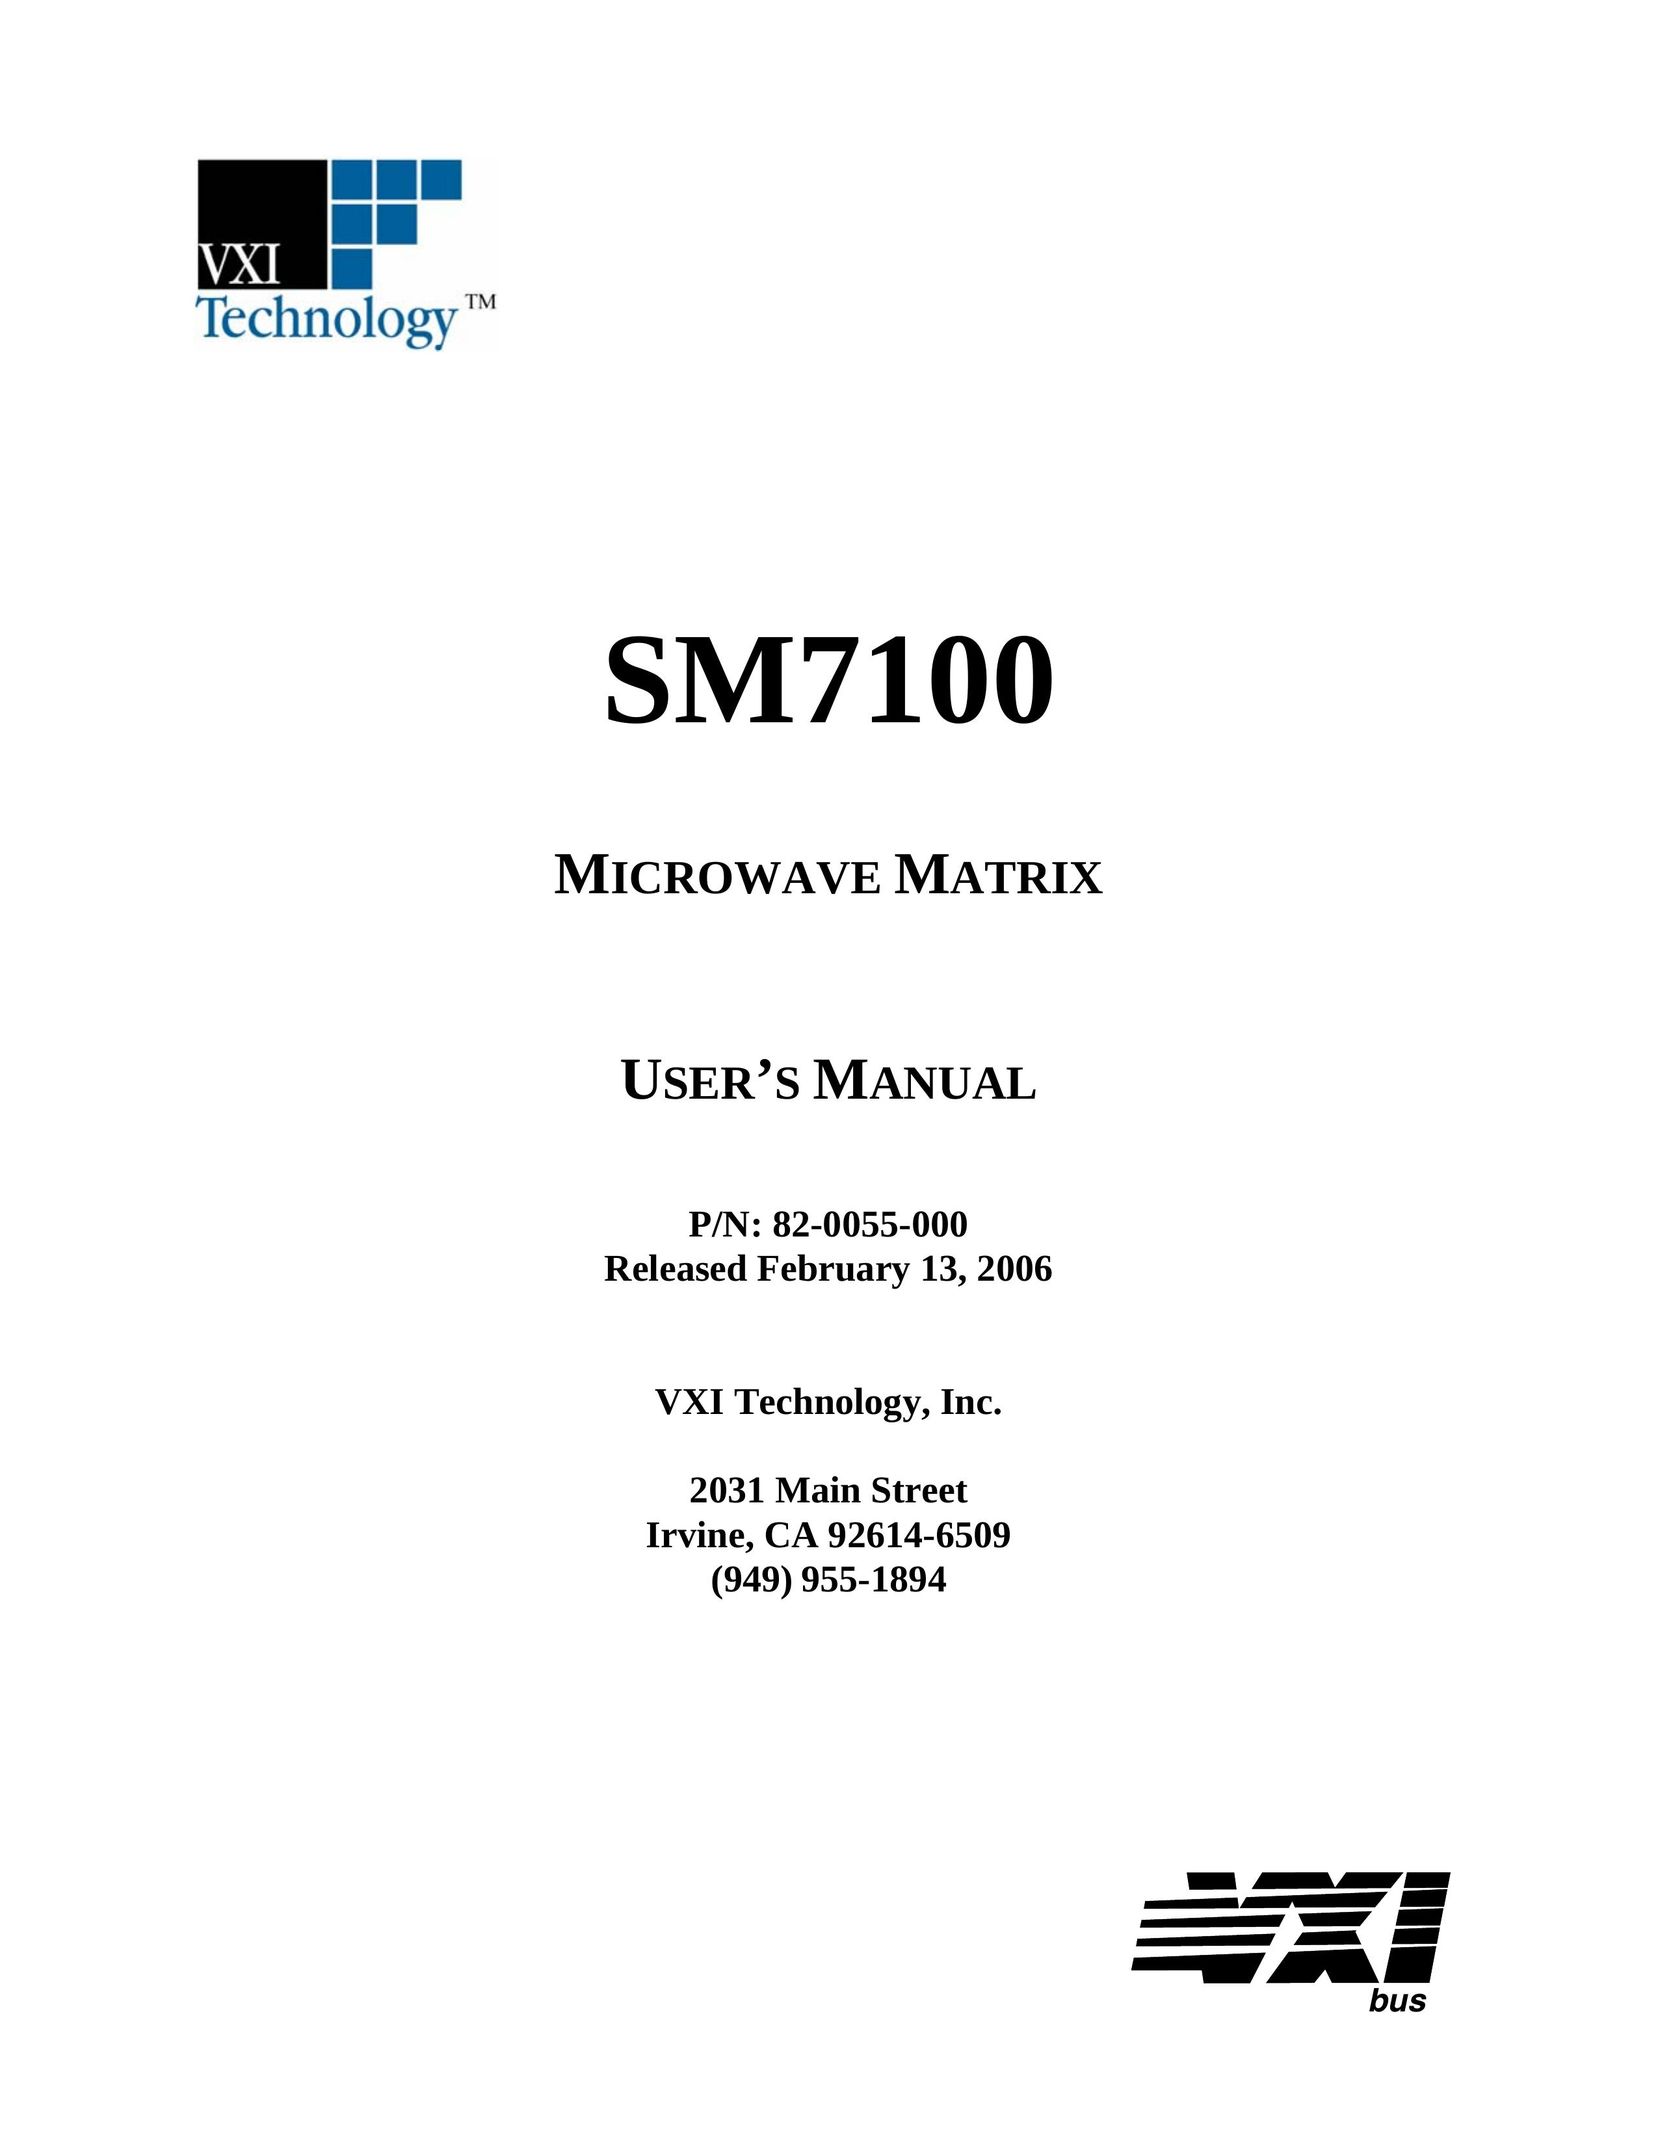 VXI Microwave Matrix Microwave Oven User Manual